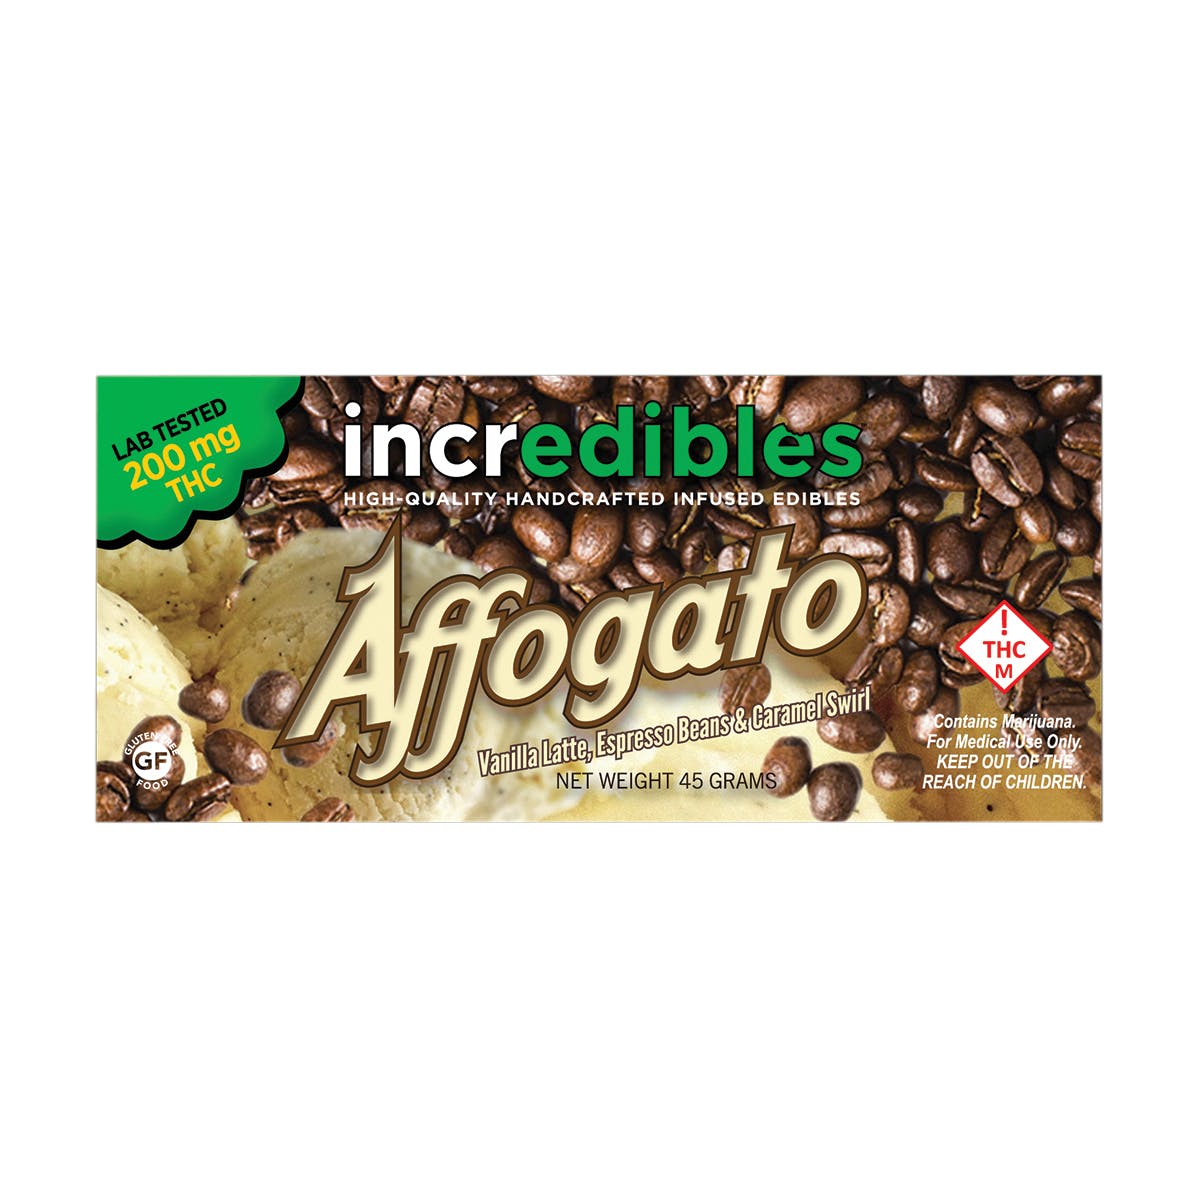 edible-incredibles-vanilla-affogato-2c-200mg-med